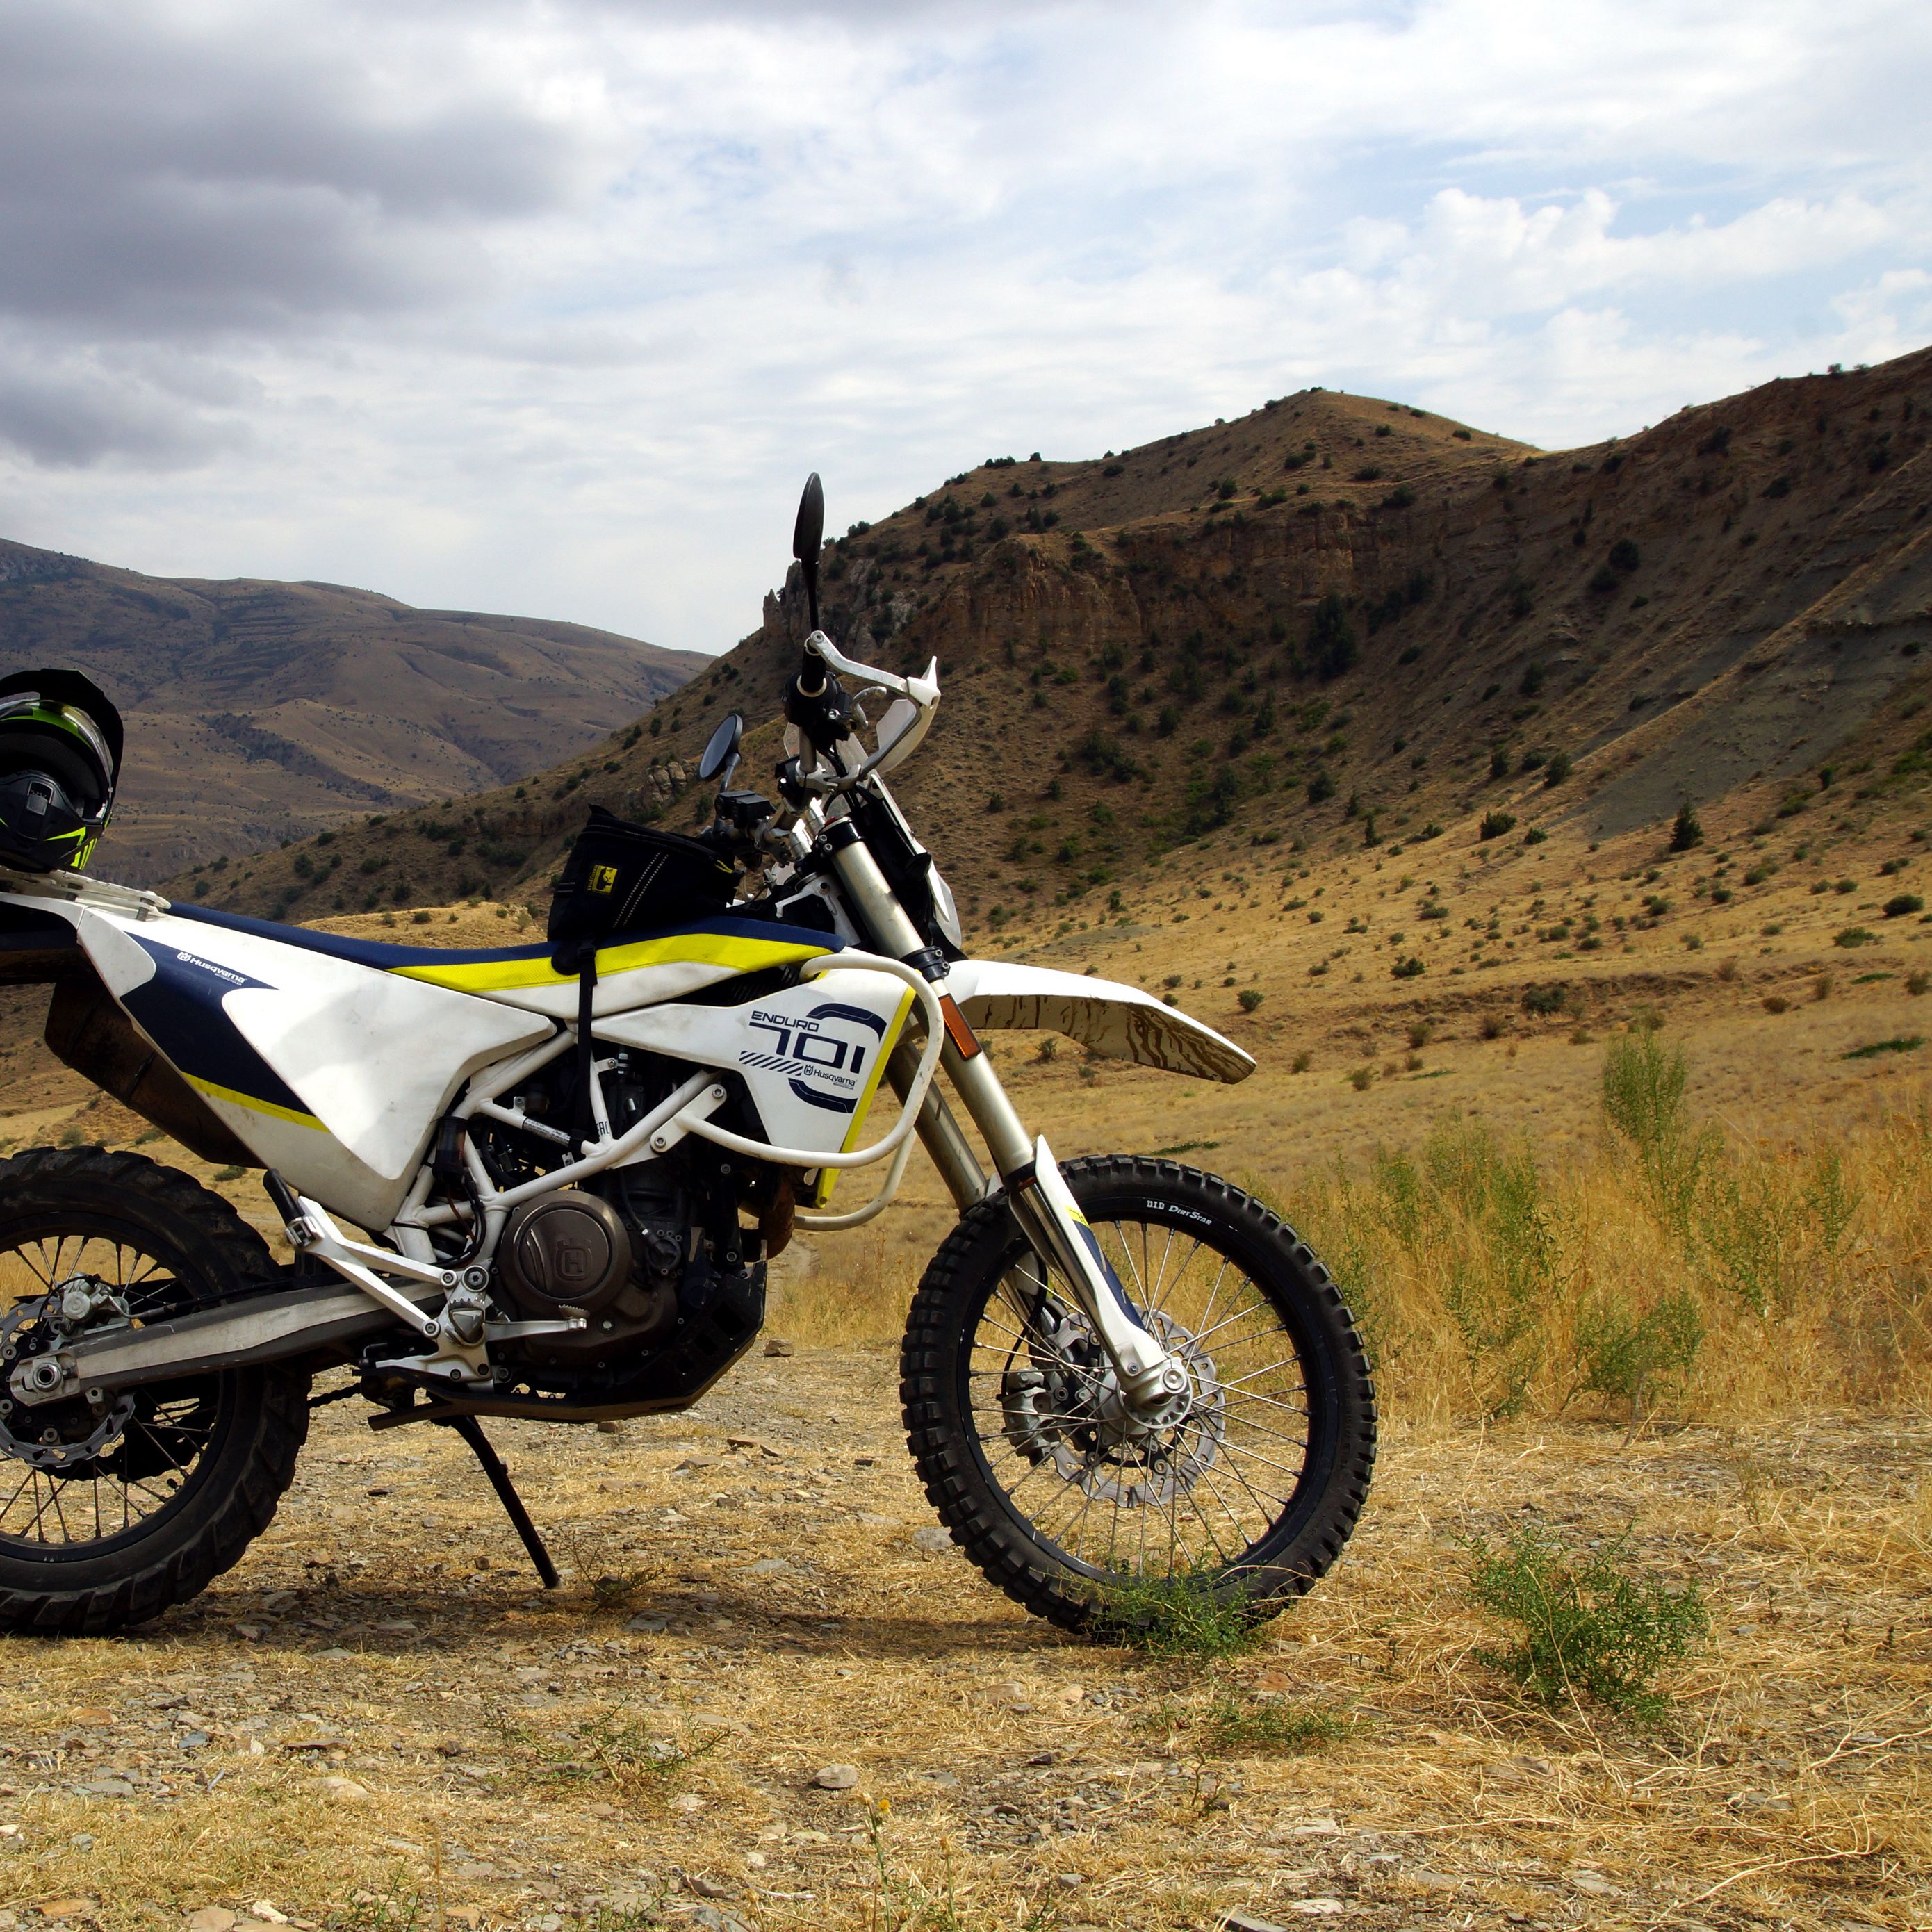 2780x2780 Wallpaper motorcycle, bike, mountains, nature